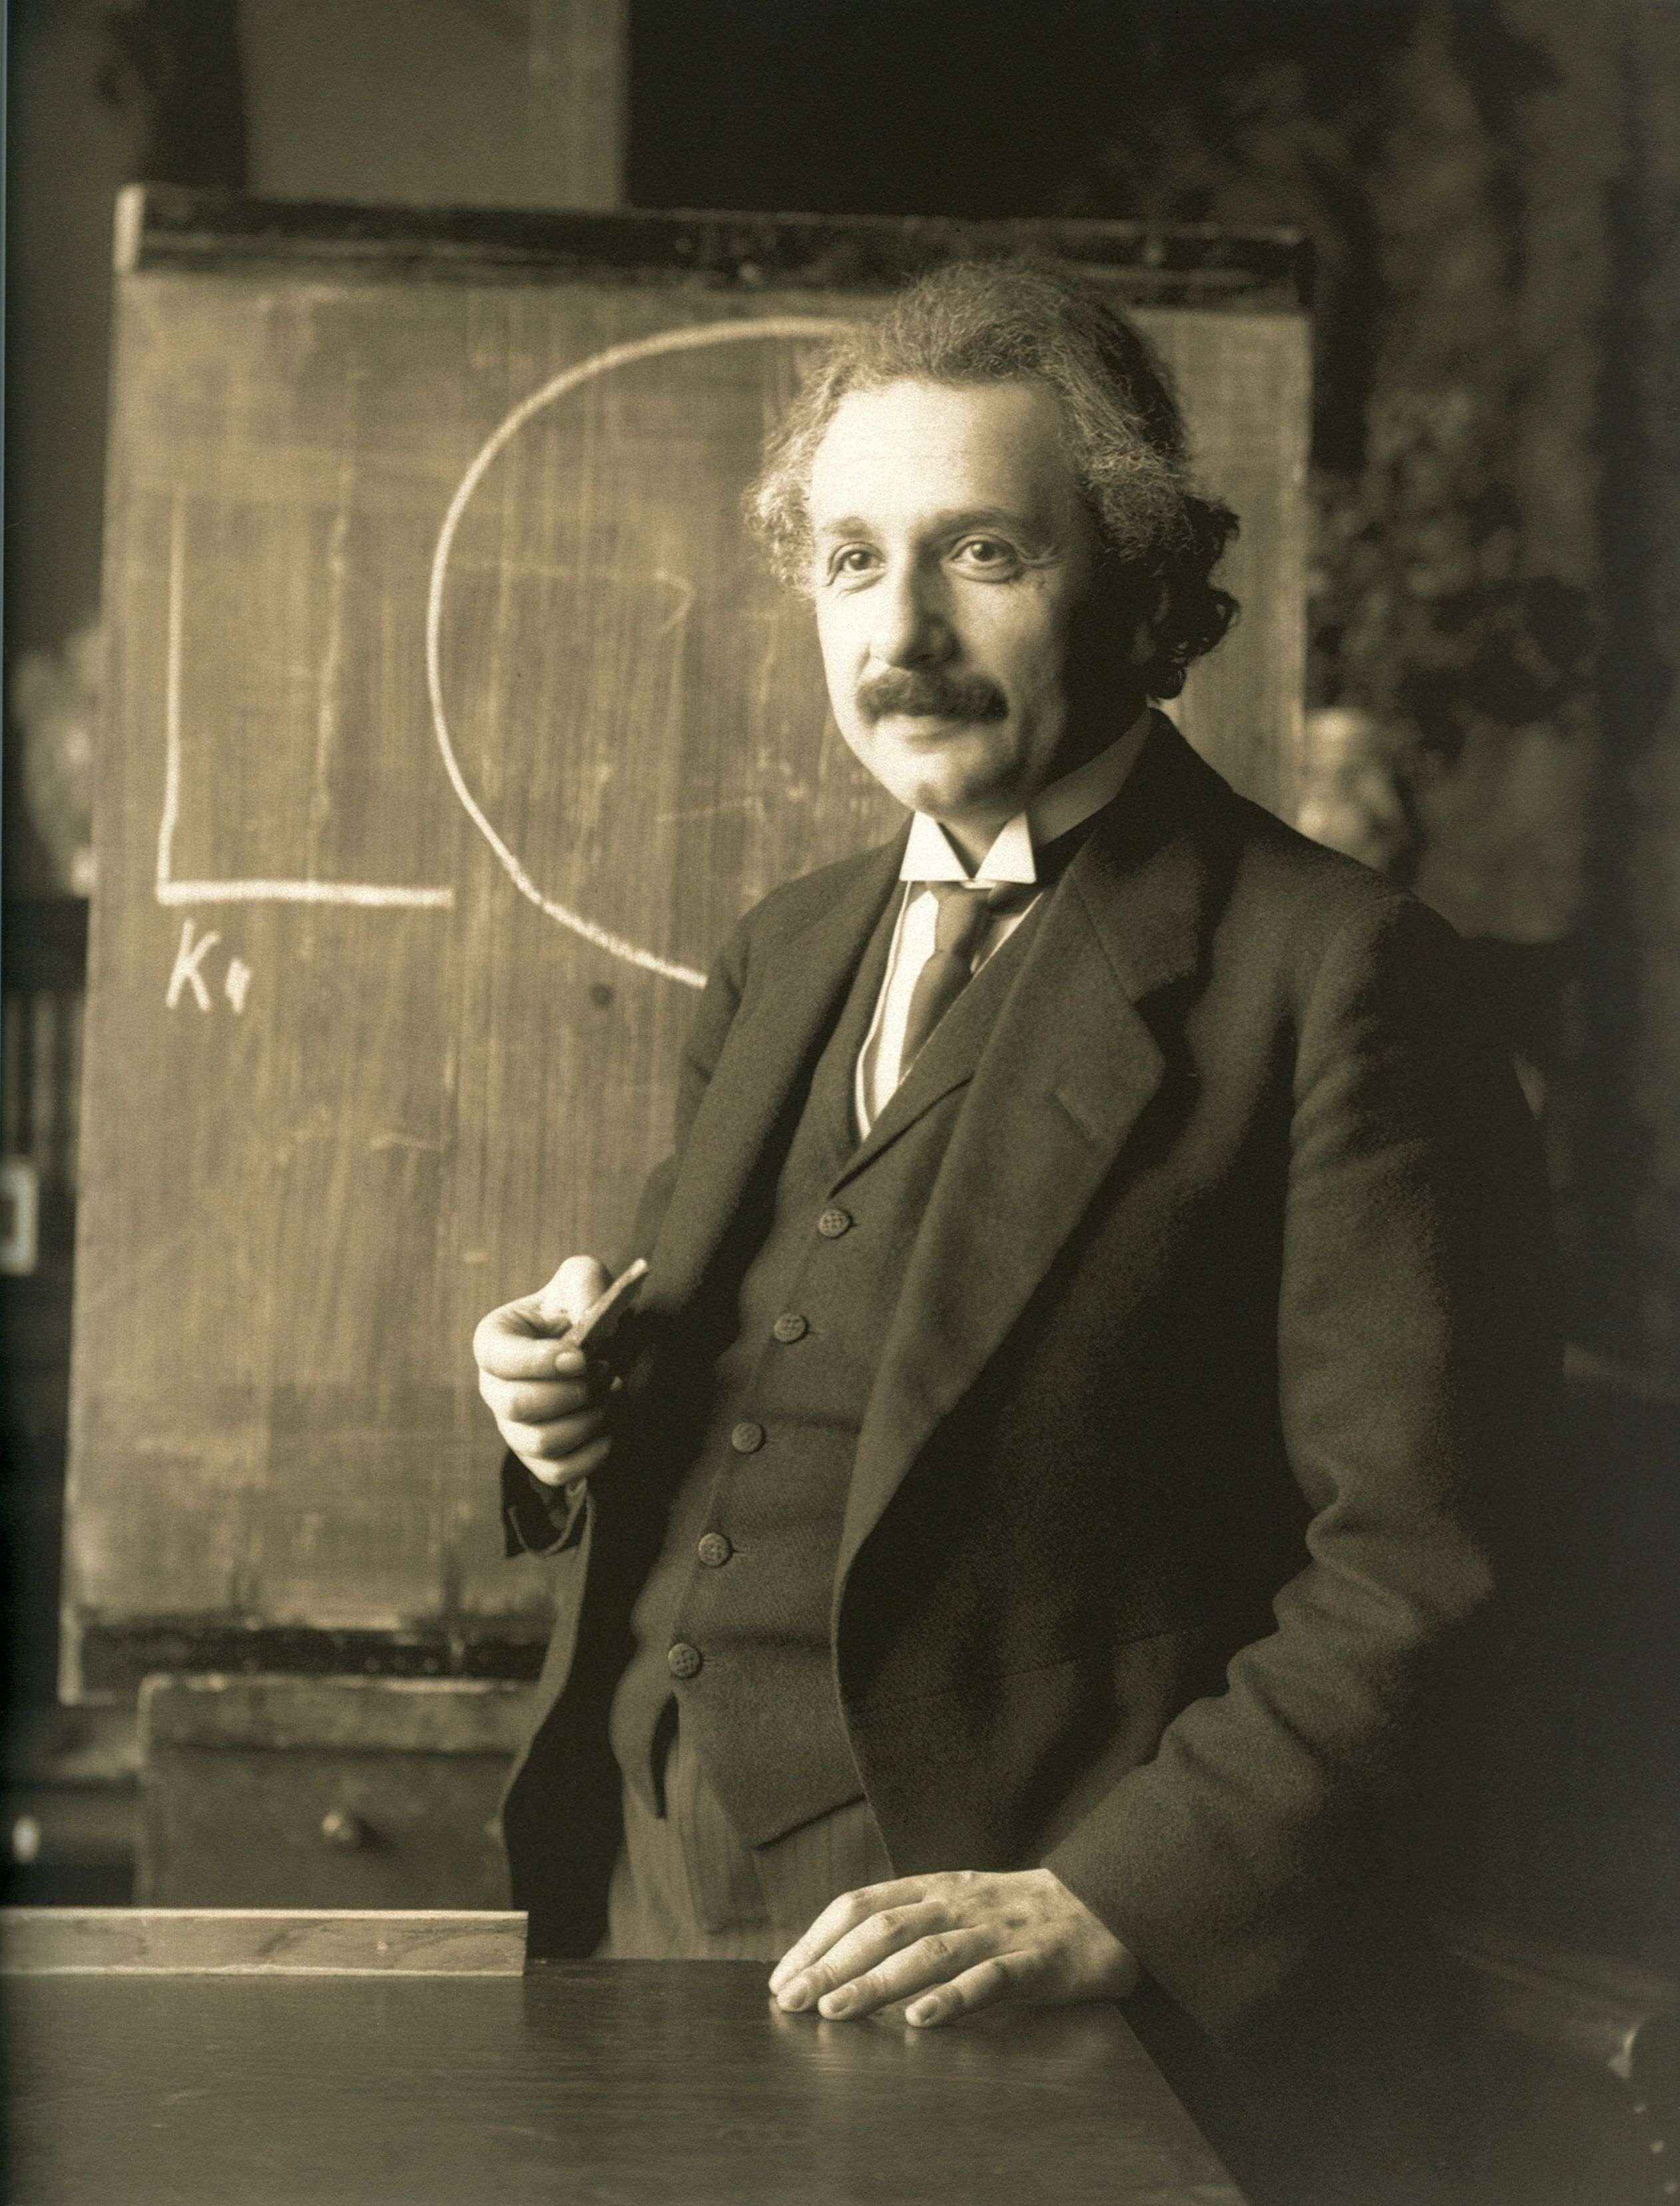 Saps resoldre l''enigma d'Einstein'? Només un 2 % pot